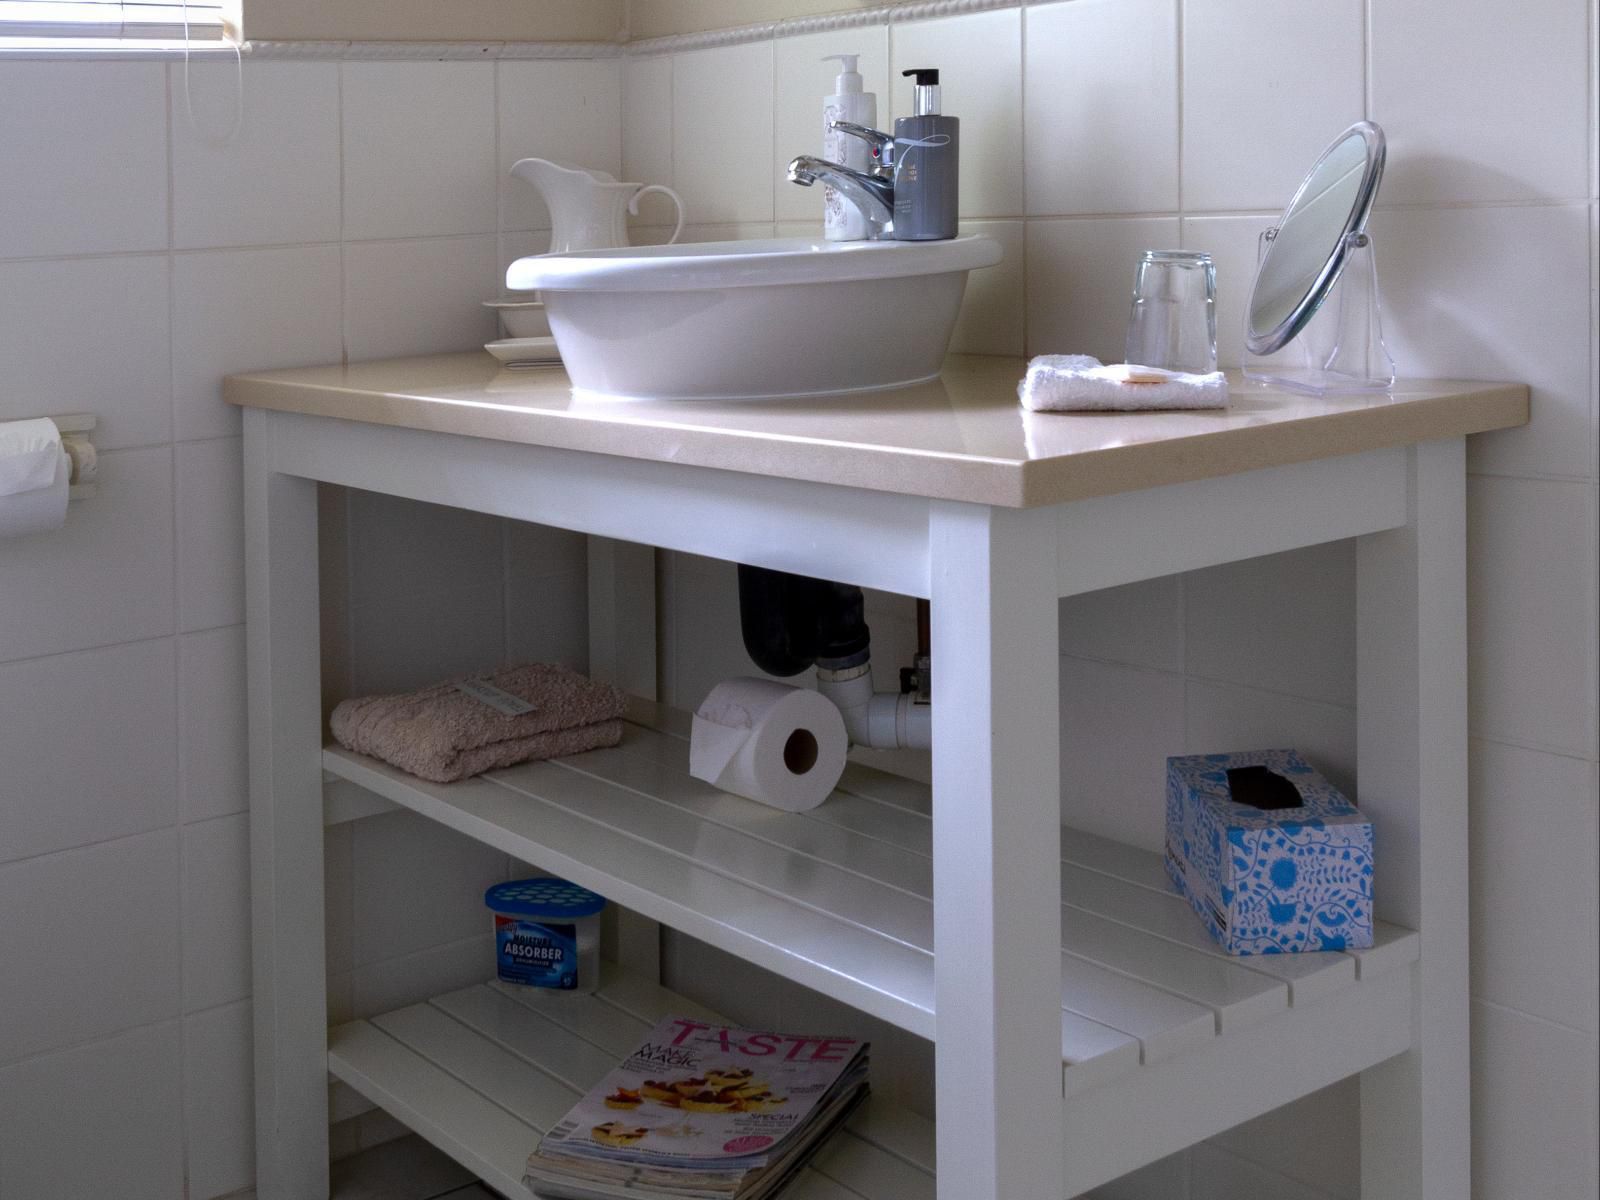 Avilla House Westville Durban Kwazulu Natal South Africa Unsaturated, Basket, Bathroom